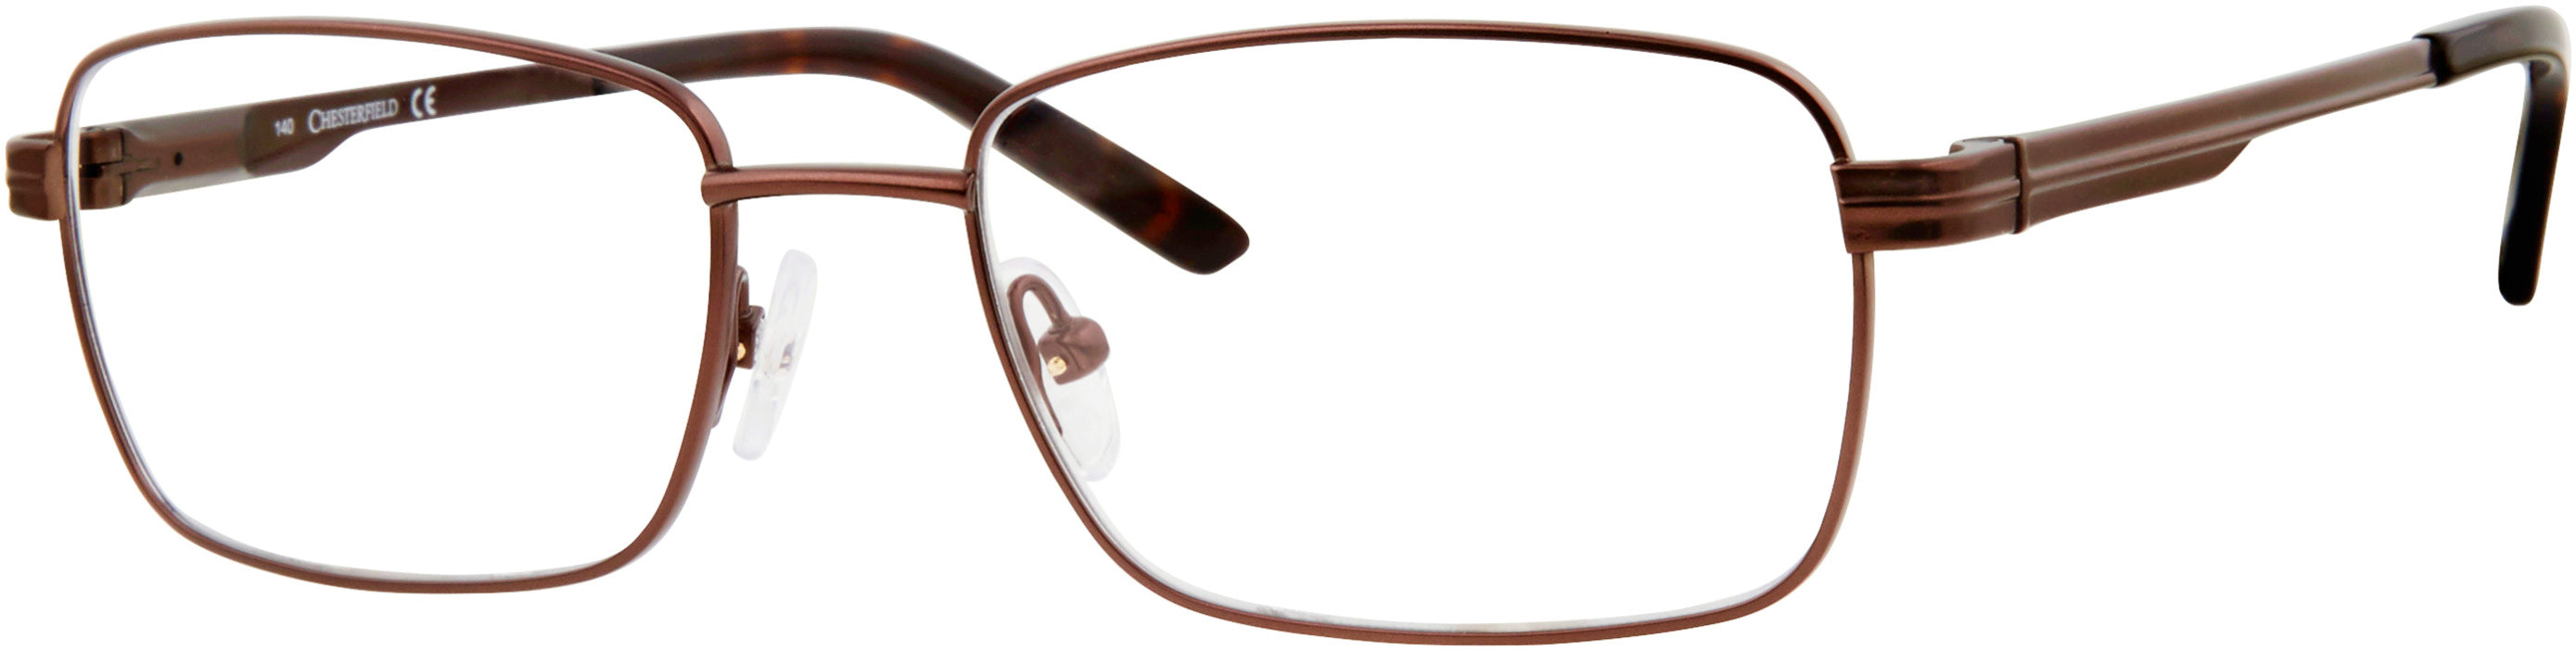  Chesterfield 887/T Rectangular Eyeglasses 04IN-04IN  Matte Brown (00 Demo Lens)